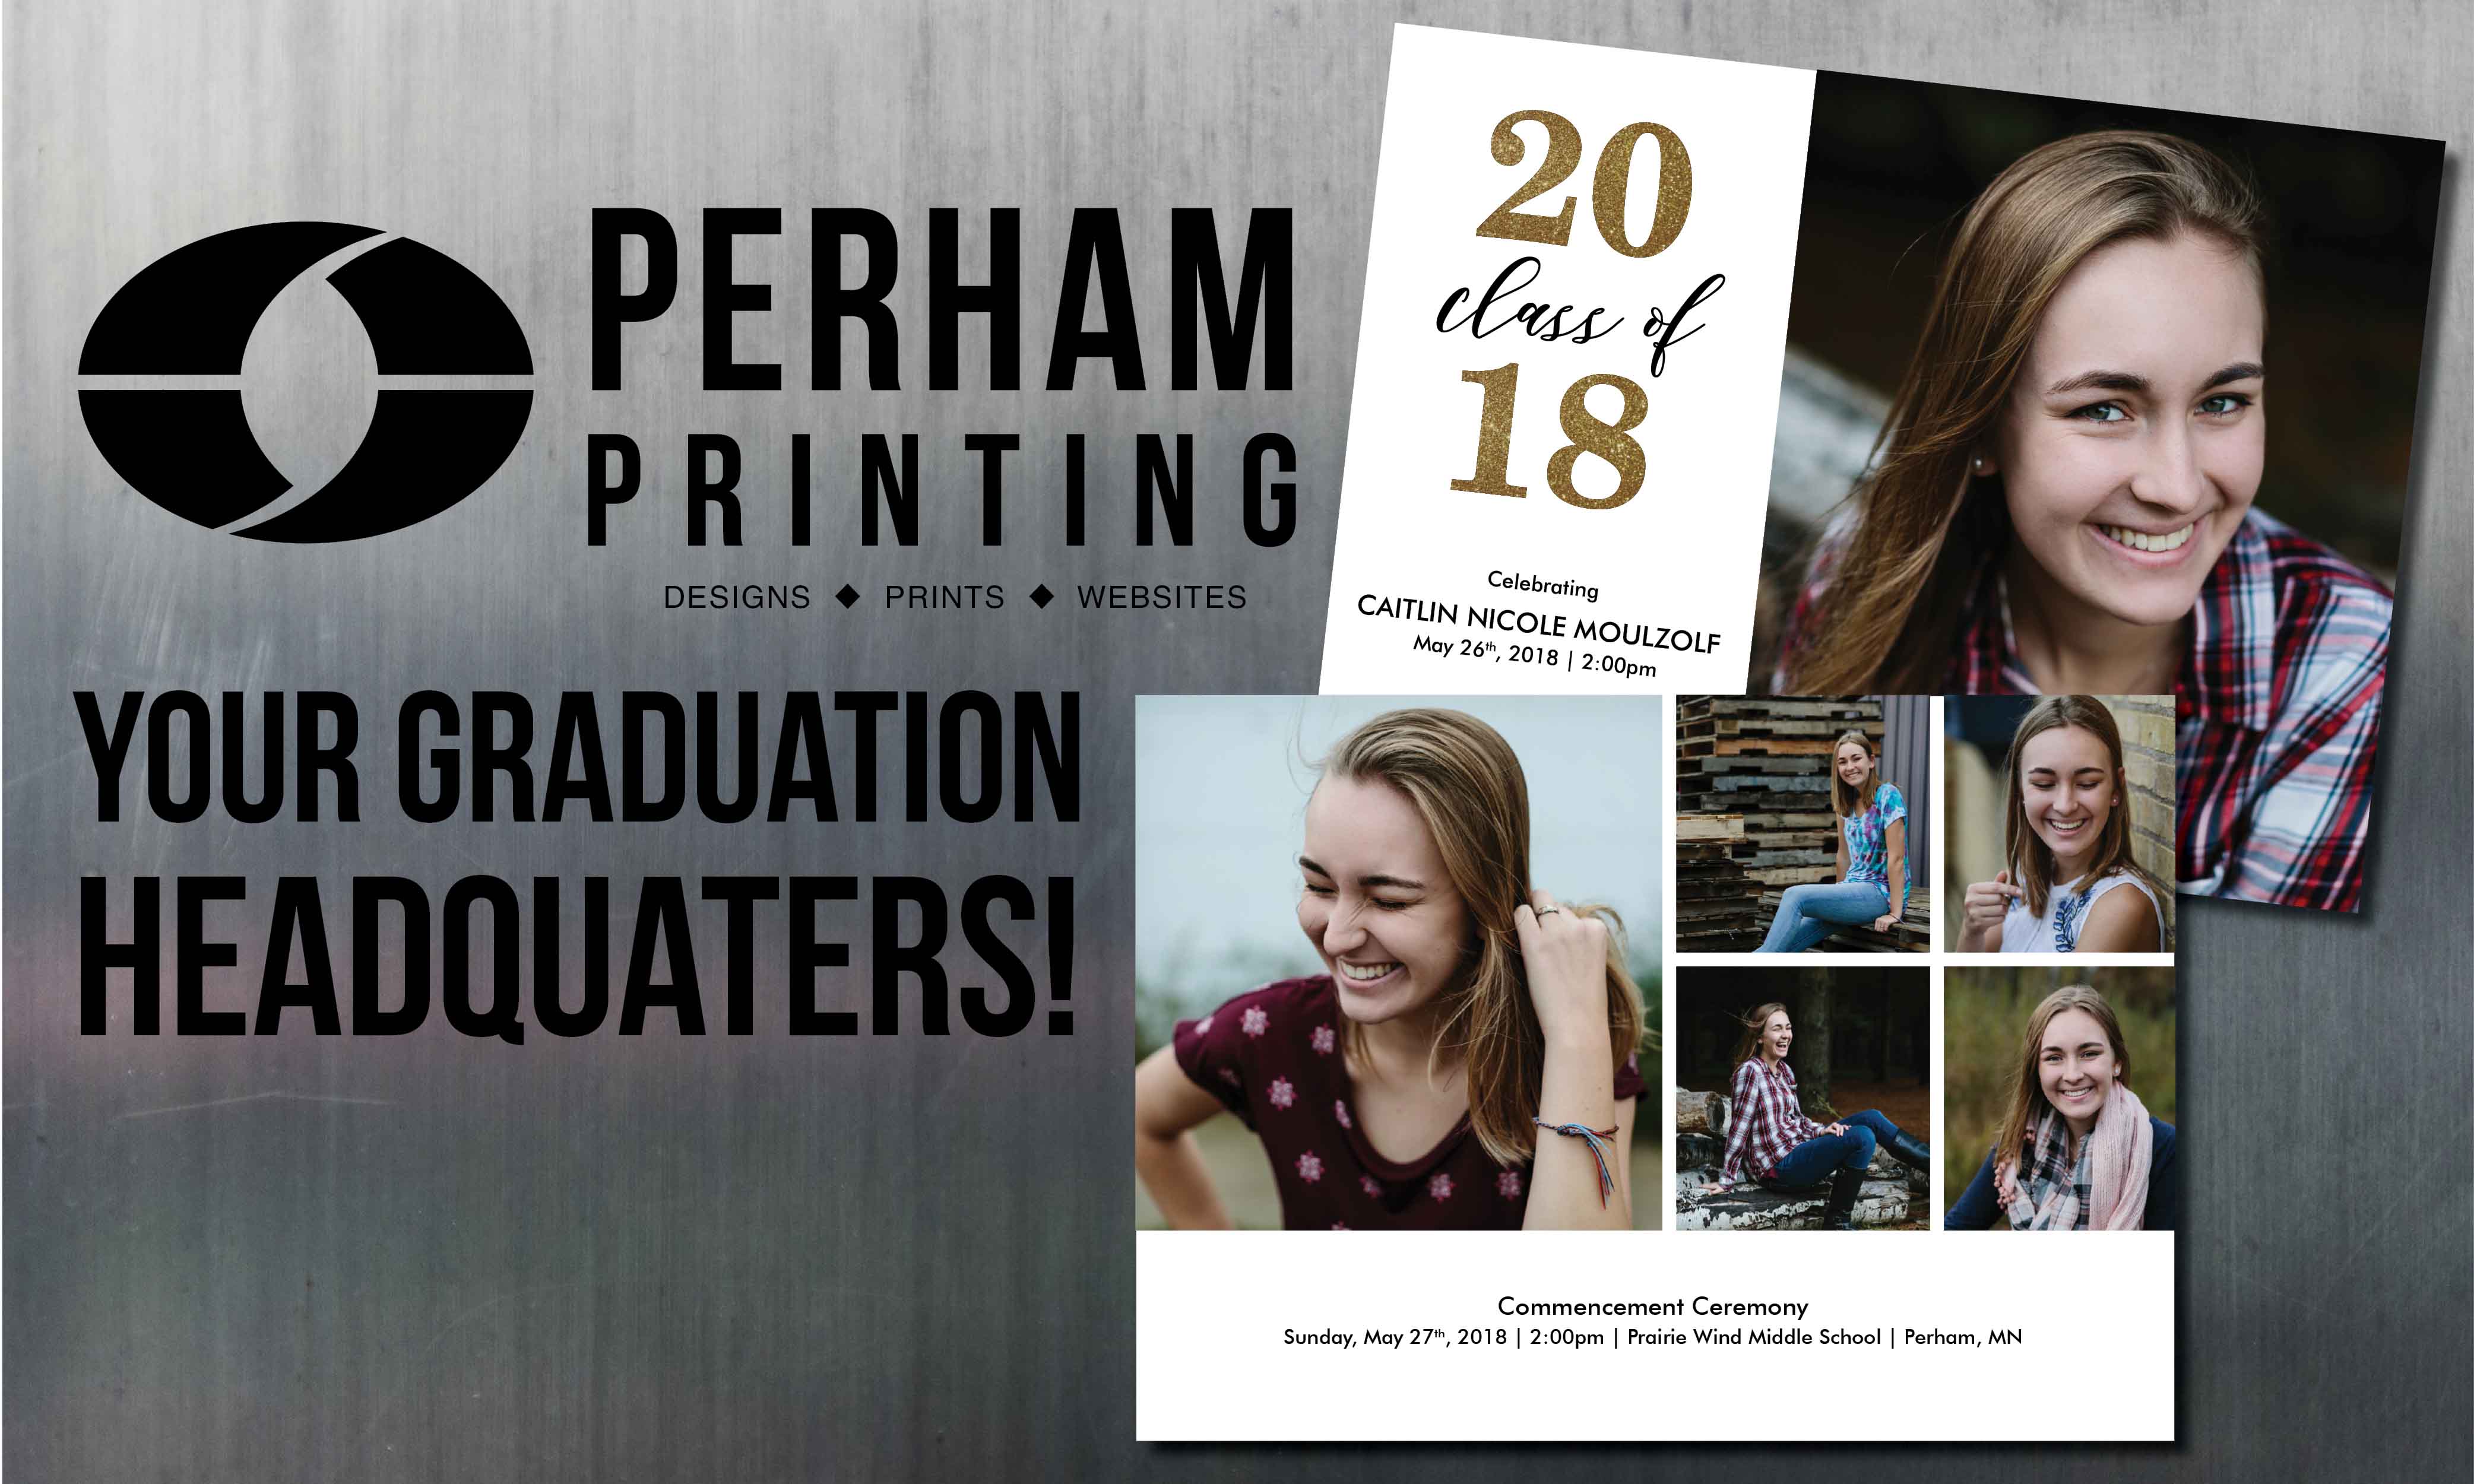 Perham Printing. . . Your Graduation Headquarters